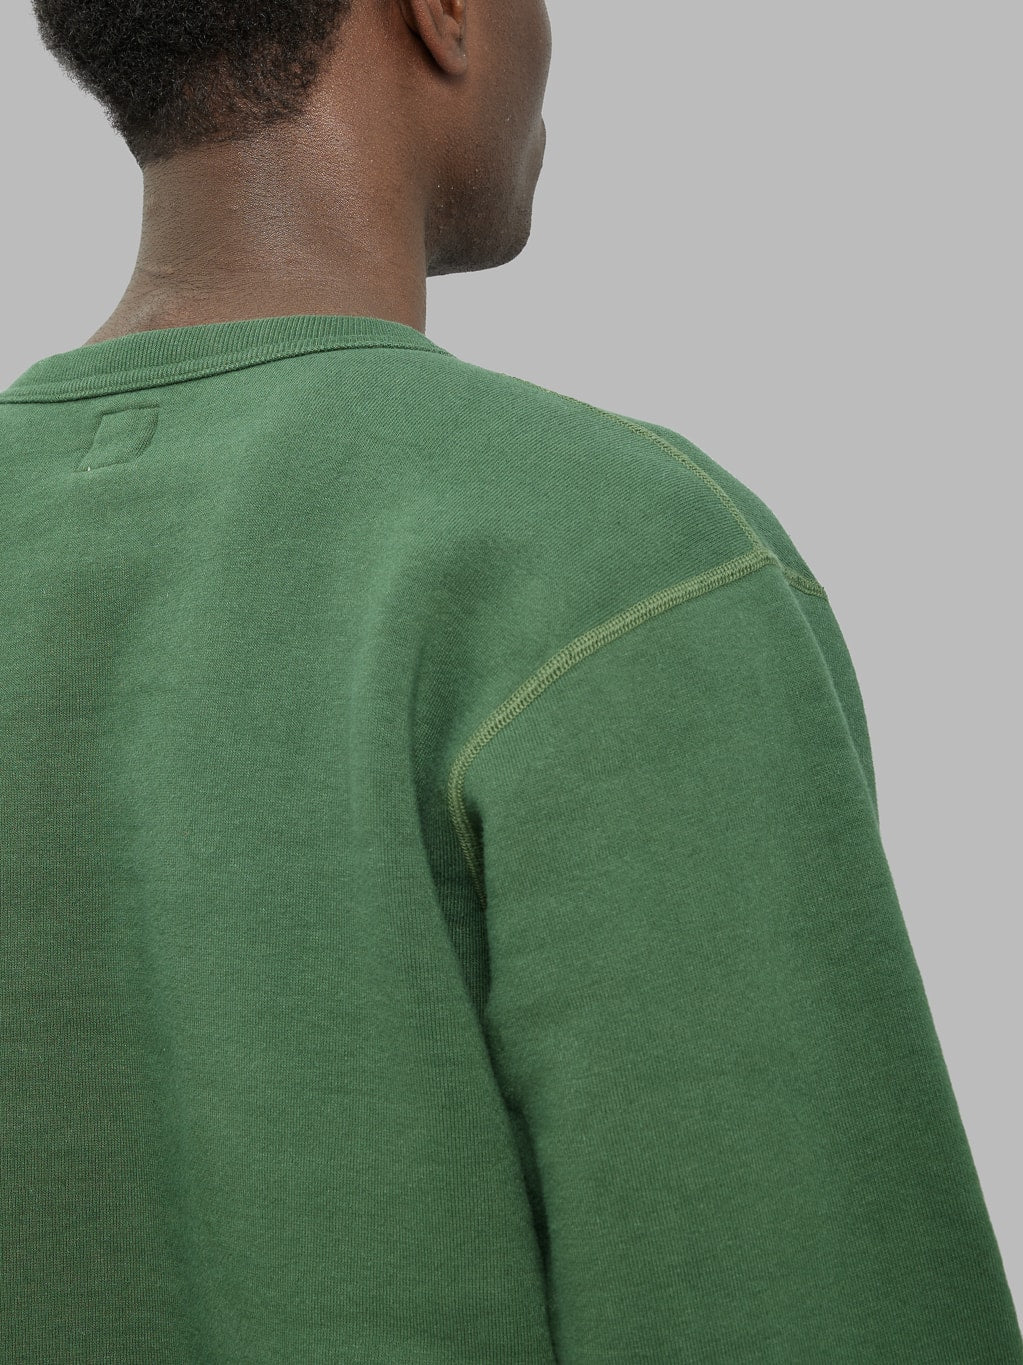 The Strike Gold Loopwheeled Sweatshirt Green sleeve